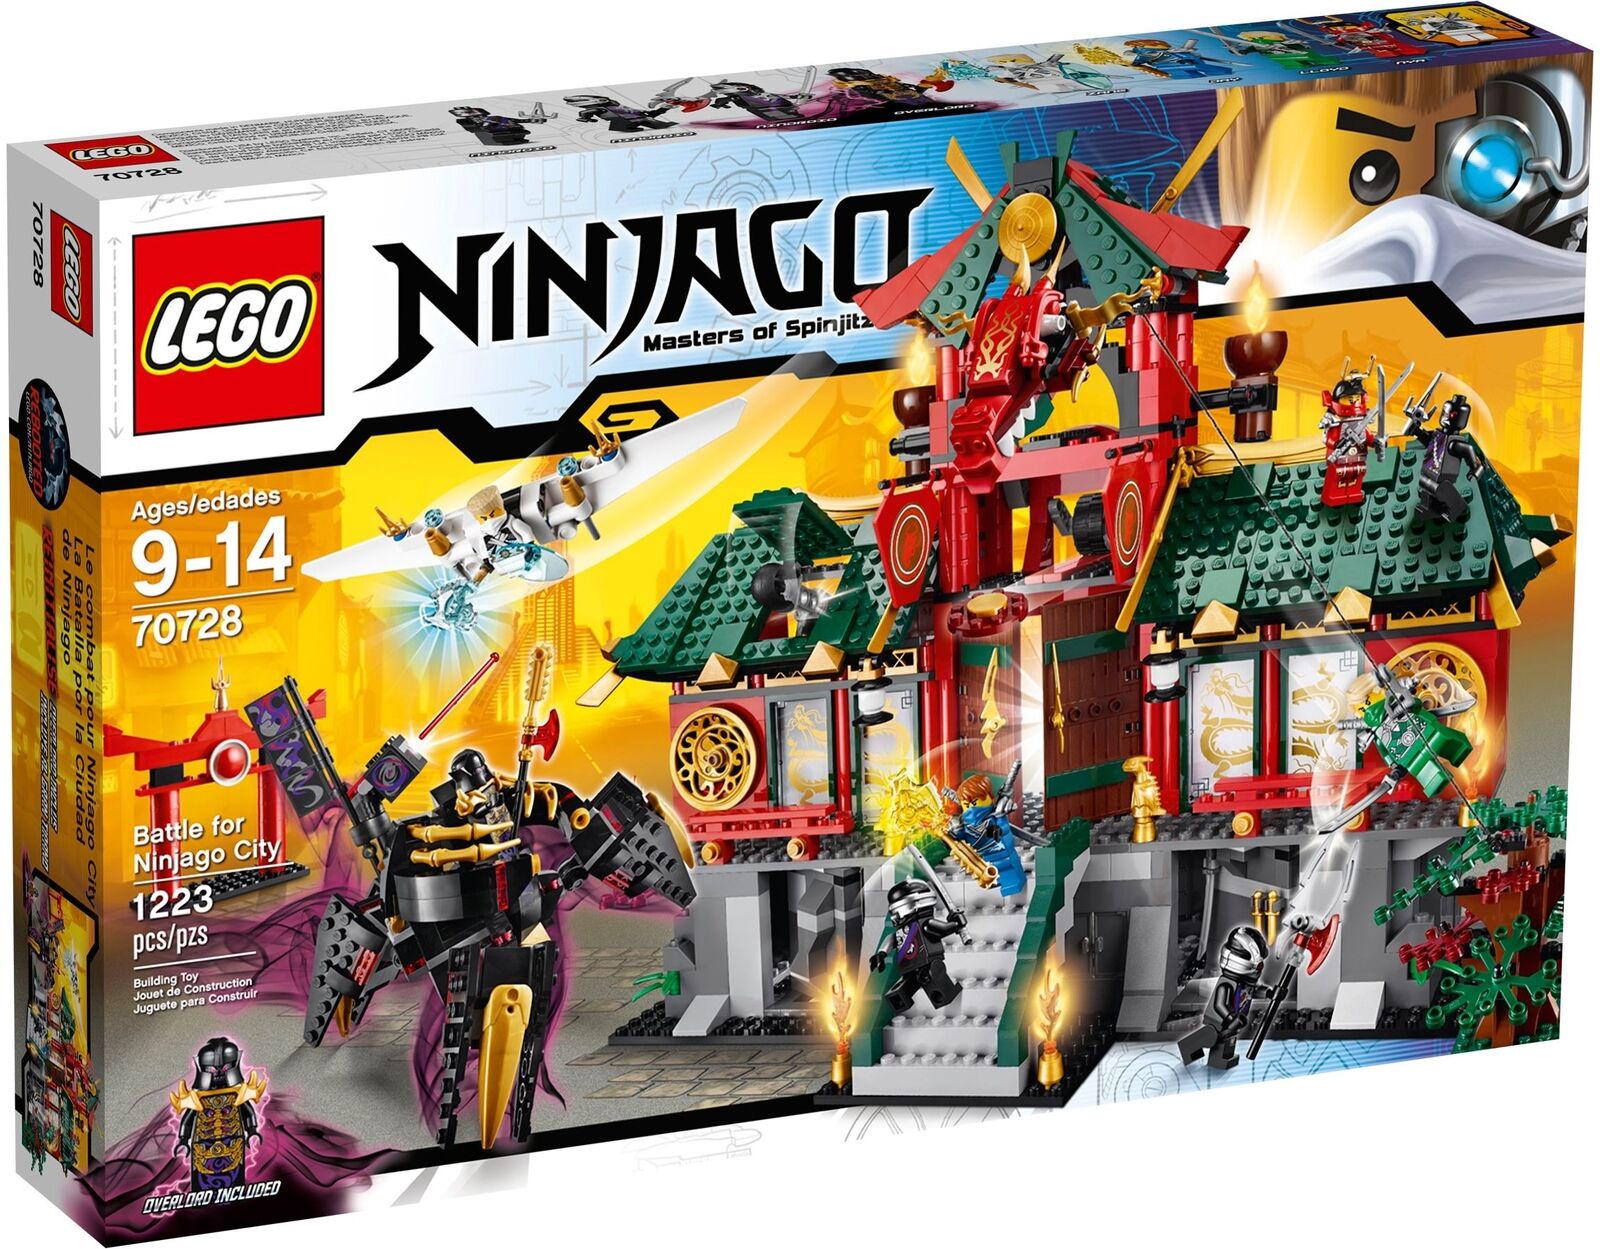 PRE-LOVED LEGO Ninjago Rebooted Battle for Ninjago City 70728